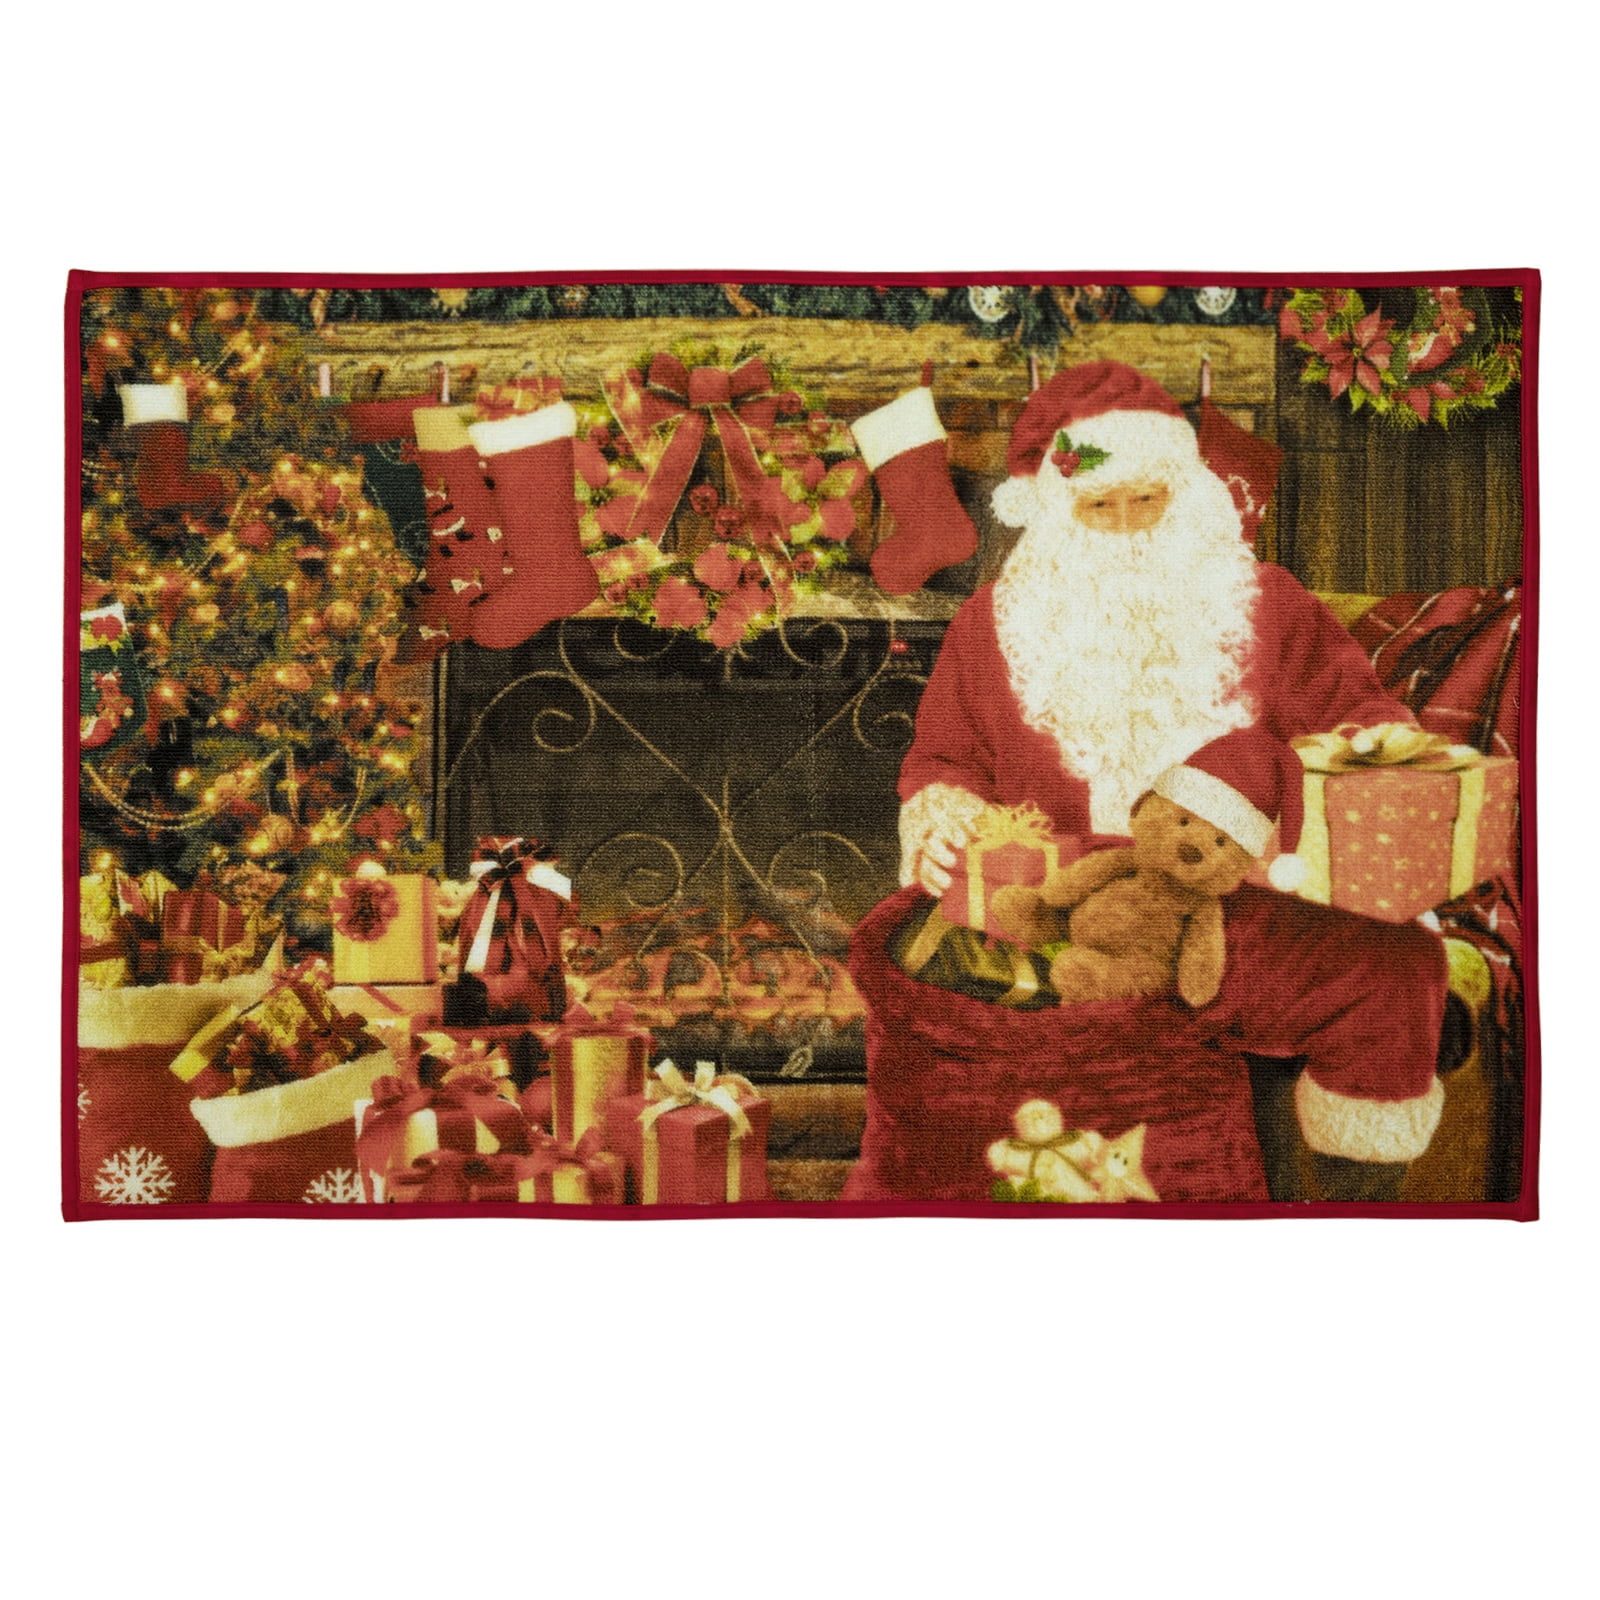 Christmas Style Door Mat Santa Claus Floor Carpet Indoor Rugs Xmas Home Decor 